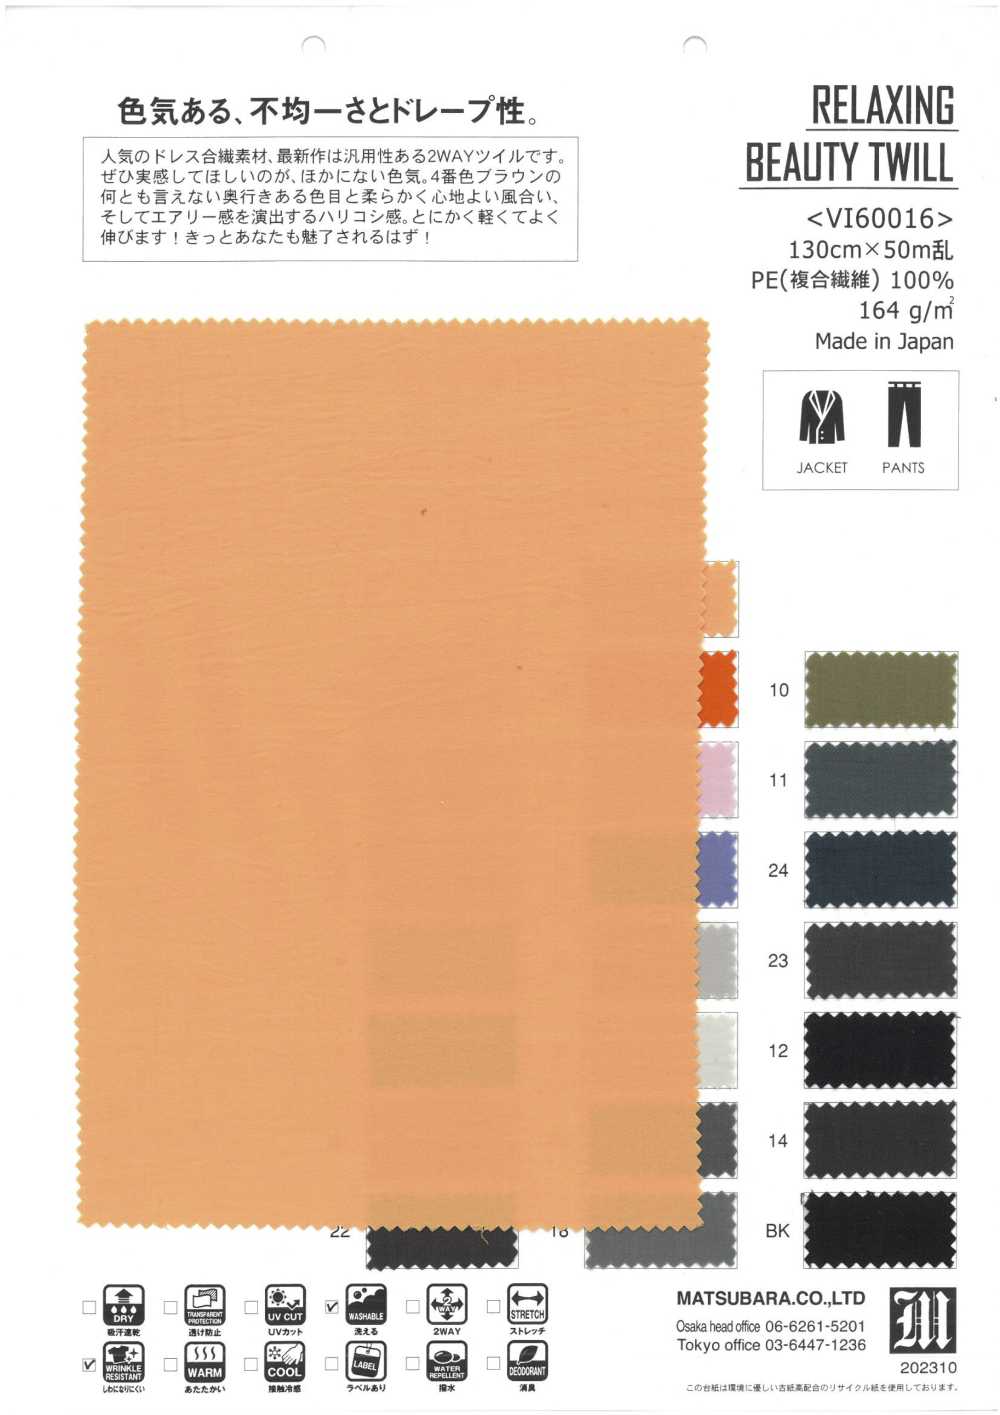 VI60016 ENTSPANNENDES BEAUTY-TWILL[Textilgewebe] Matsubara